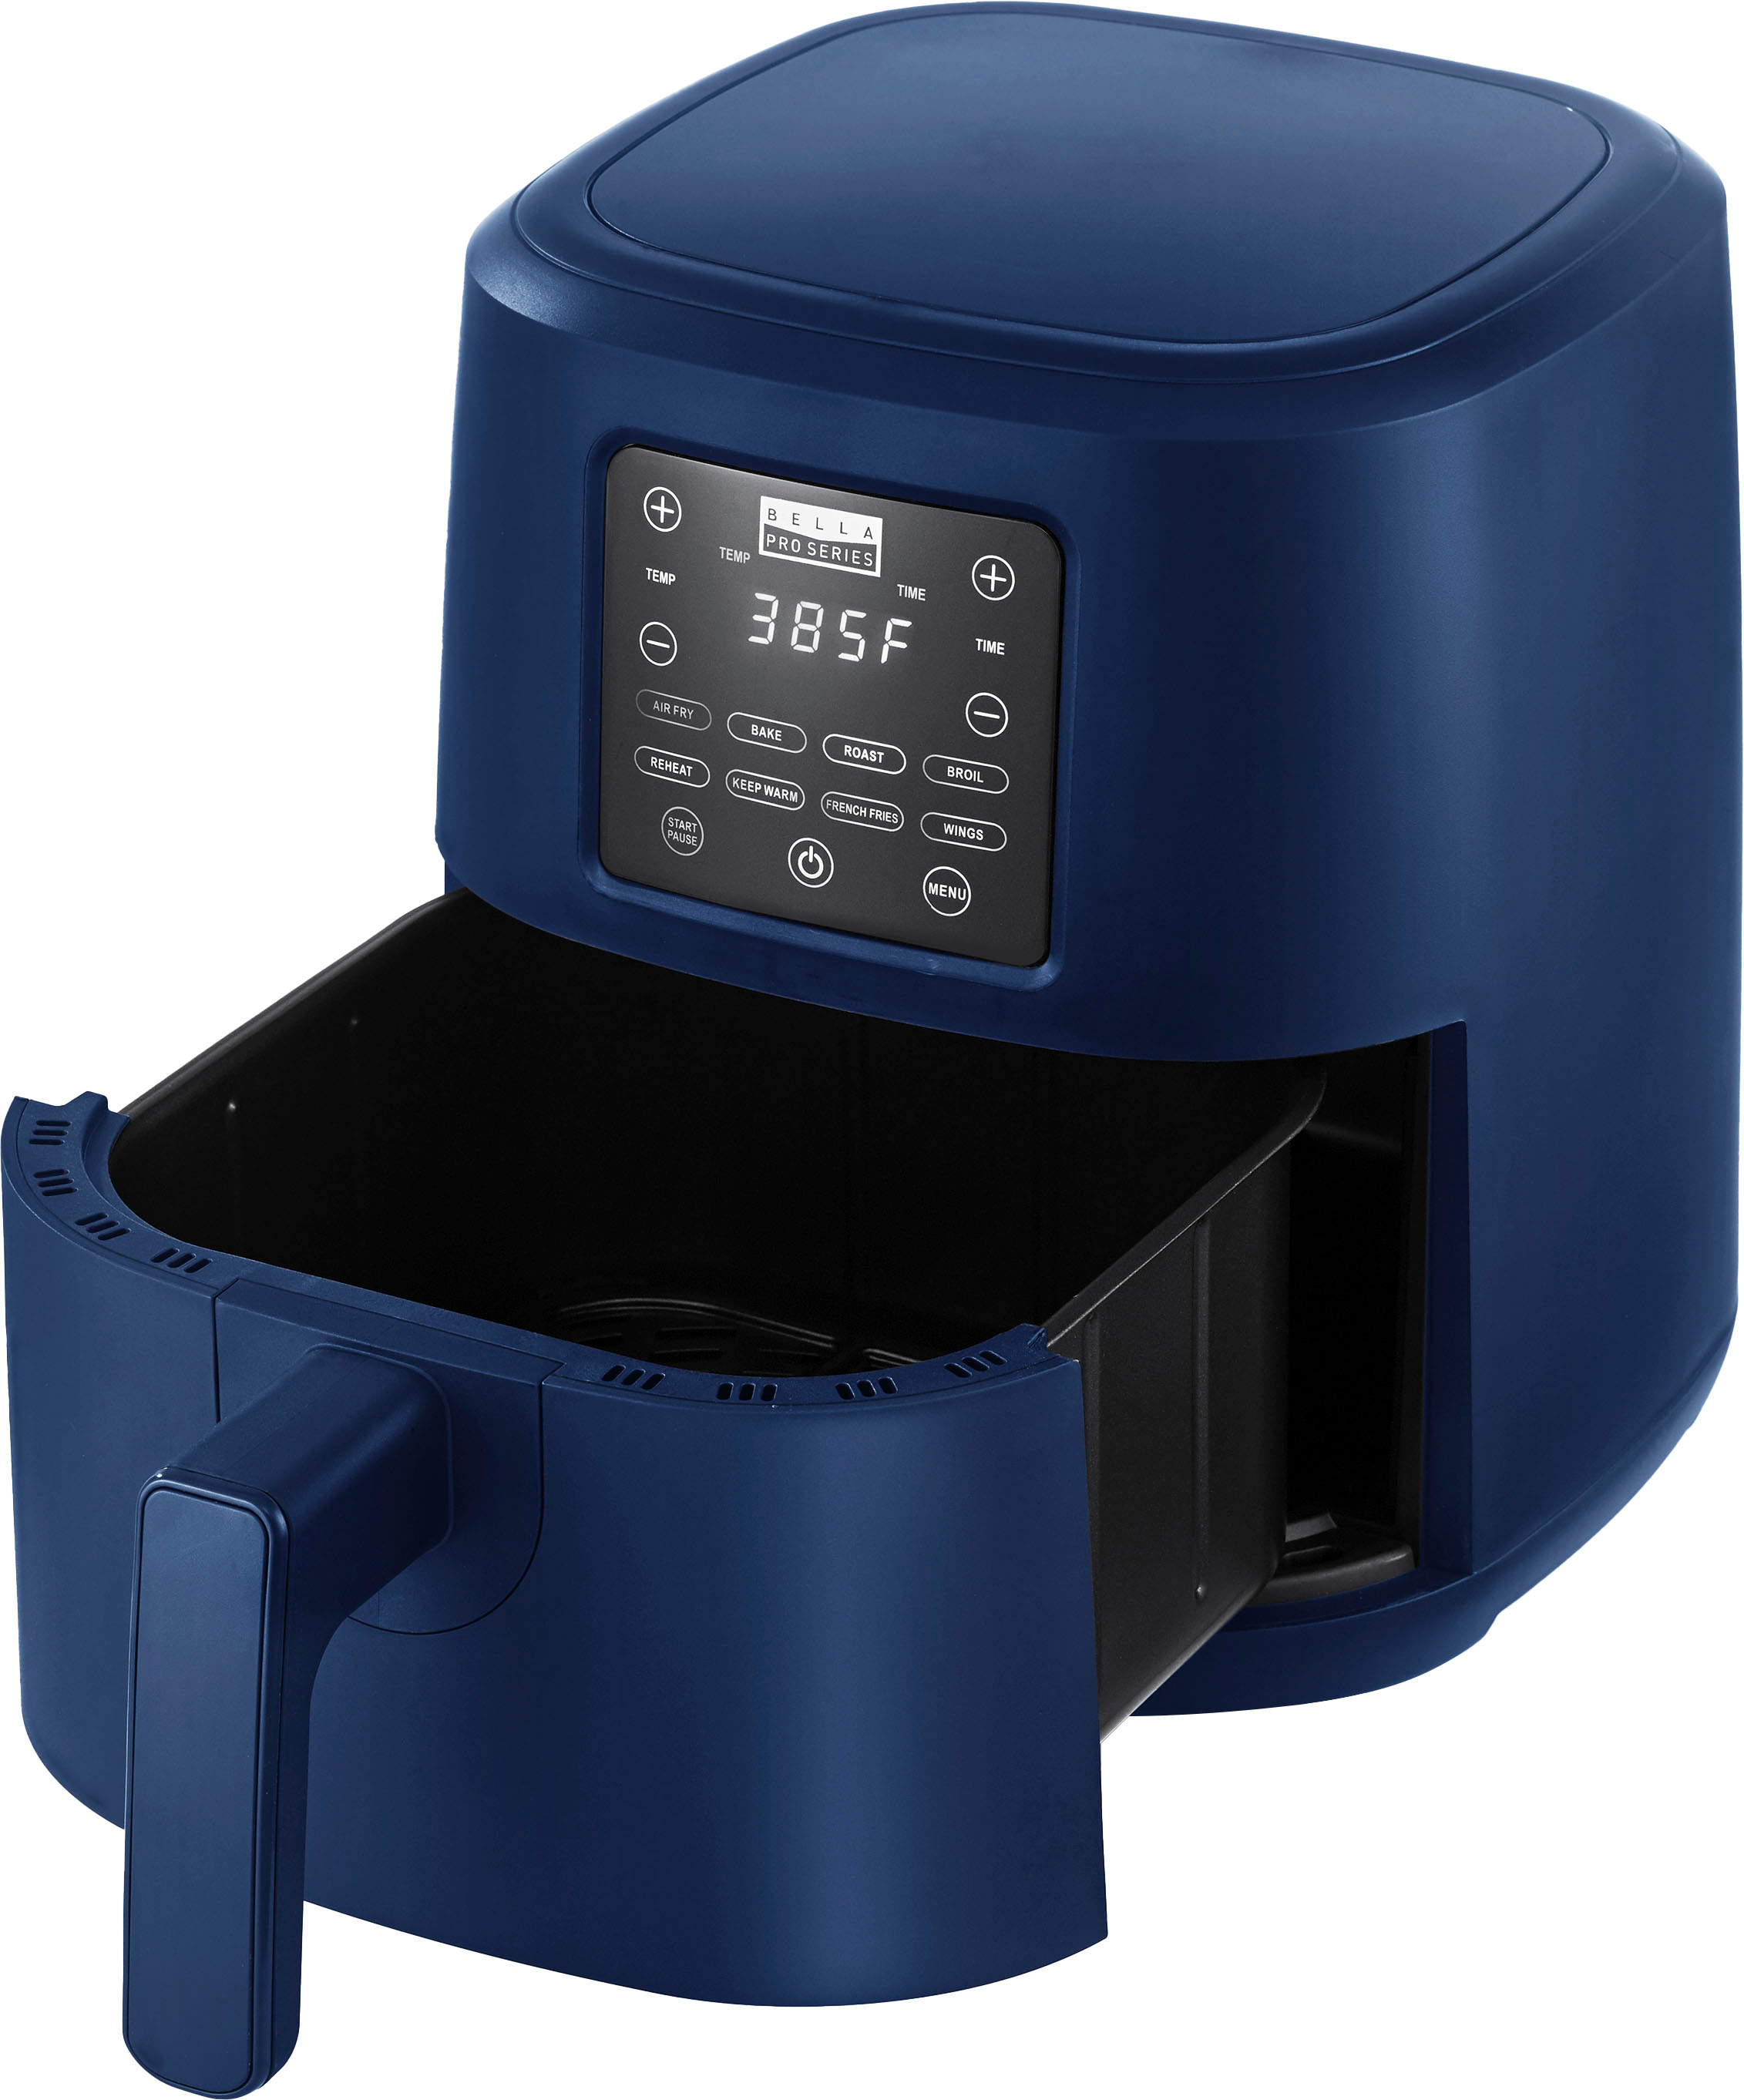 Bella Pro Series – 8-qt. Digital Air Fryer in Ink Blue Stainless